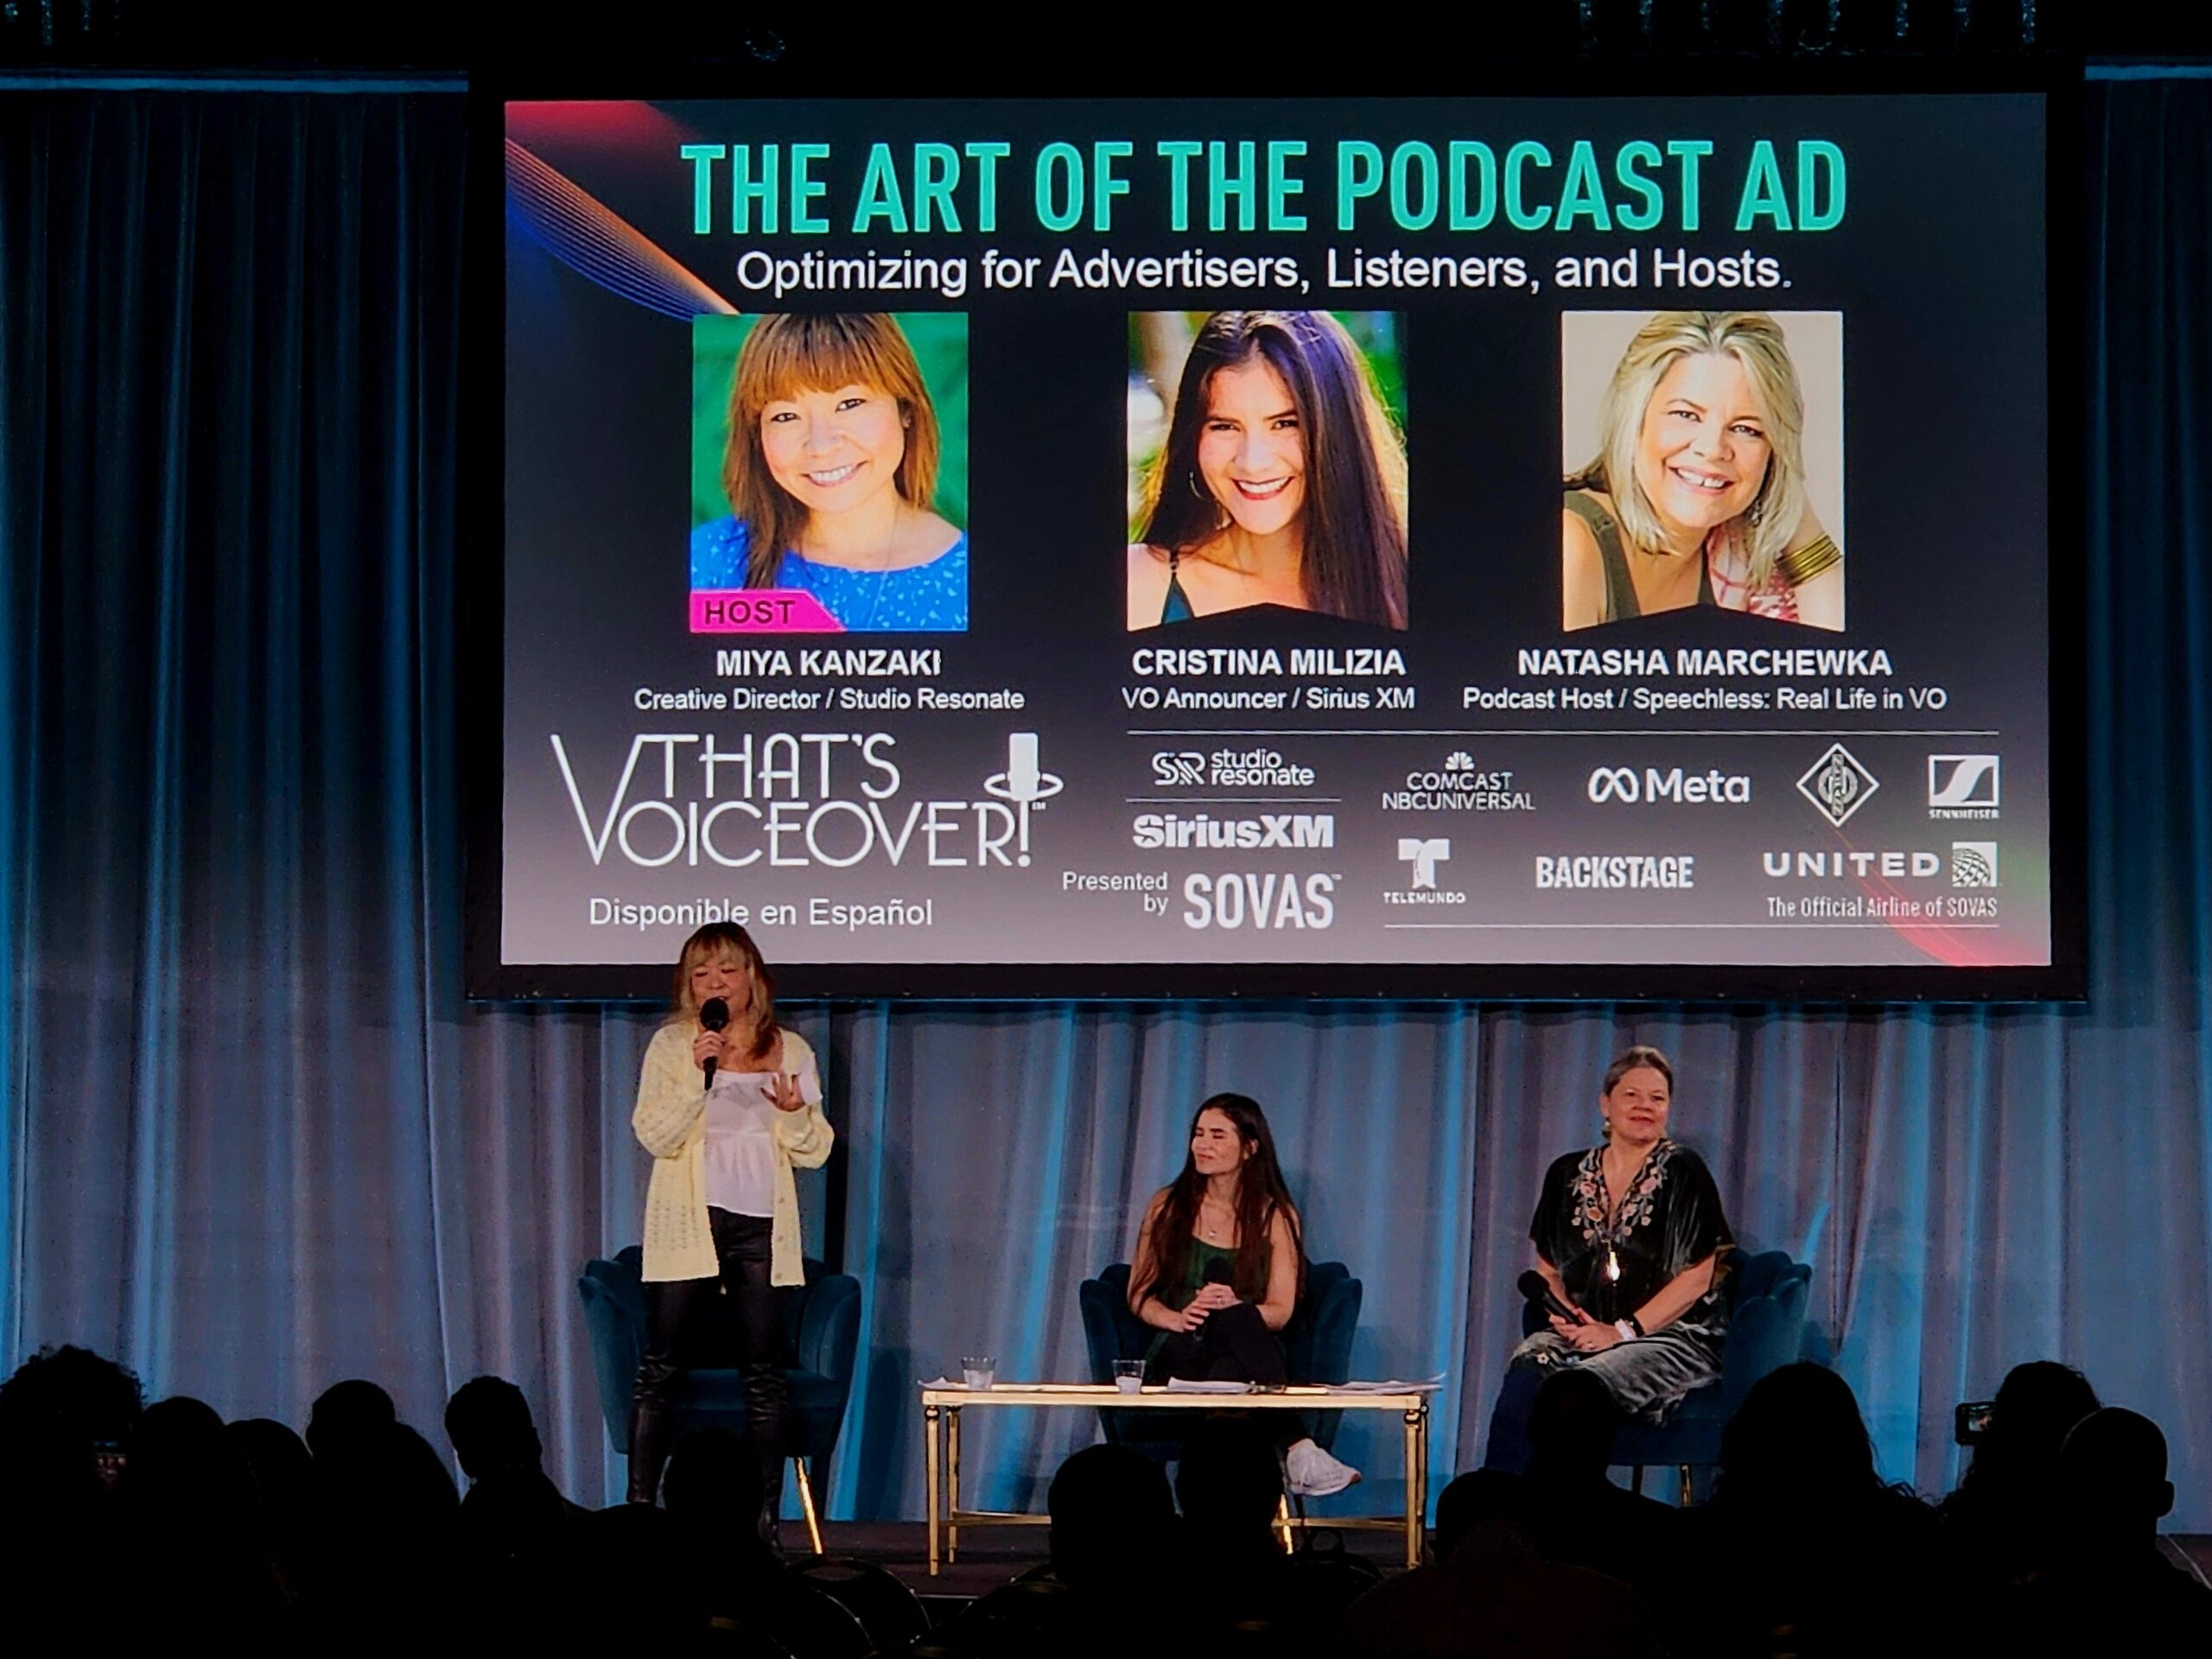 Miya Kanzaki, Cristina Milizia, and Natasha Marchewka at “That’s Voiceover” in Los Angeles. “The Art of the Podcast Ad” Panel, Hilton Los Angeles Airport.